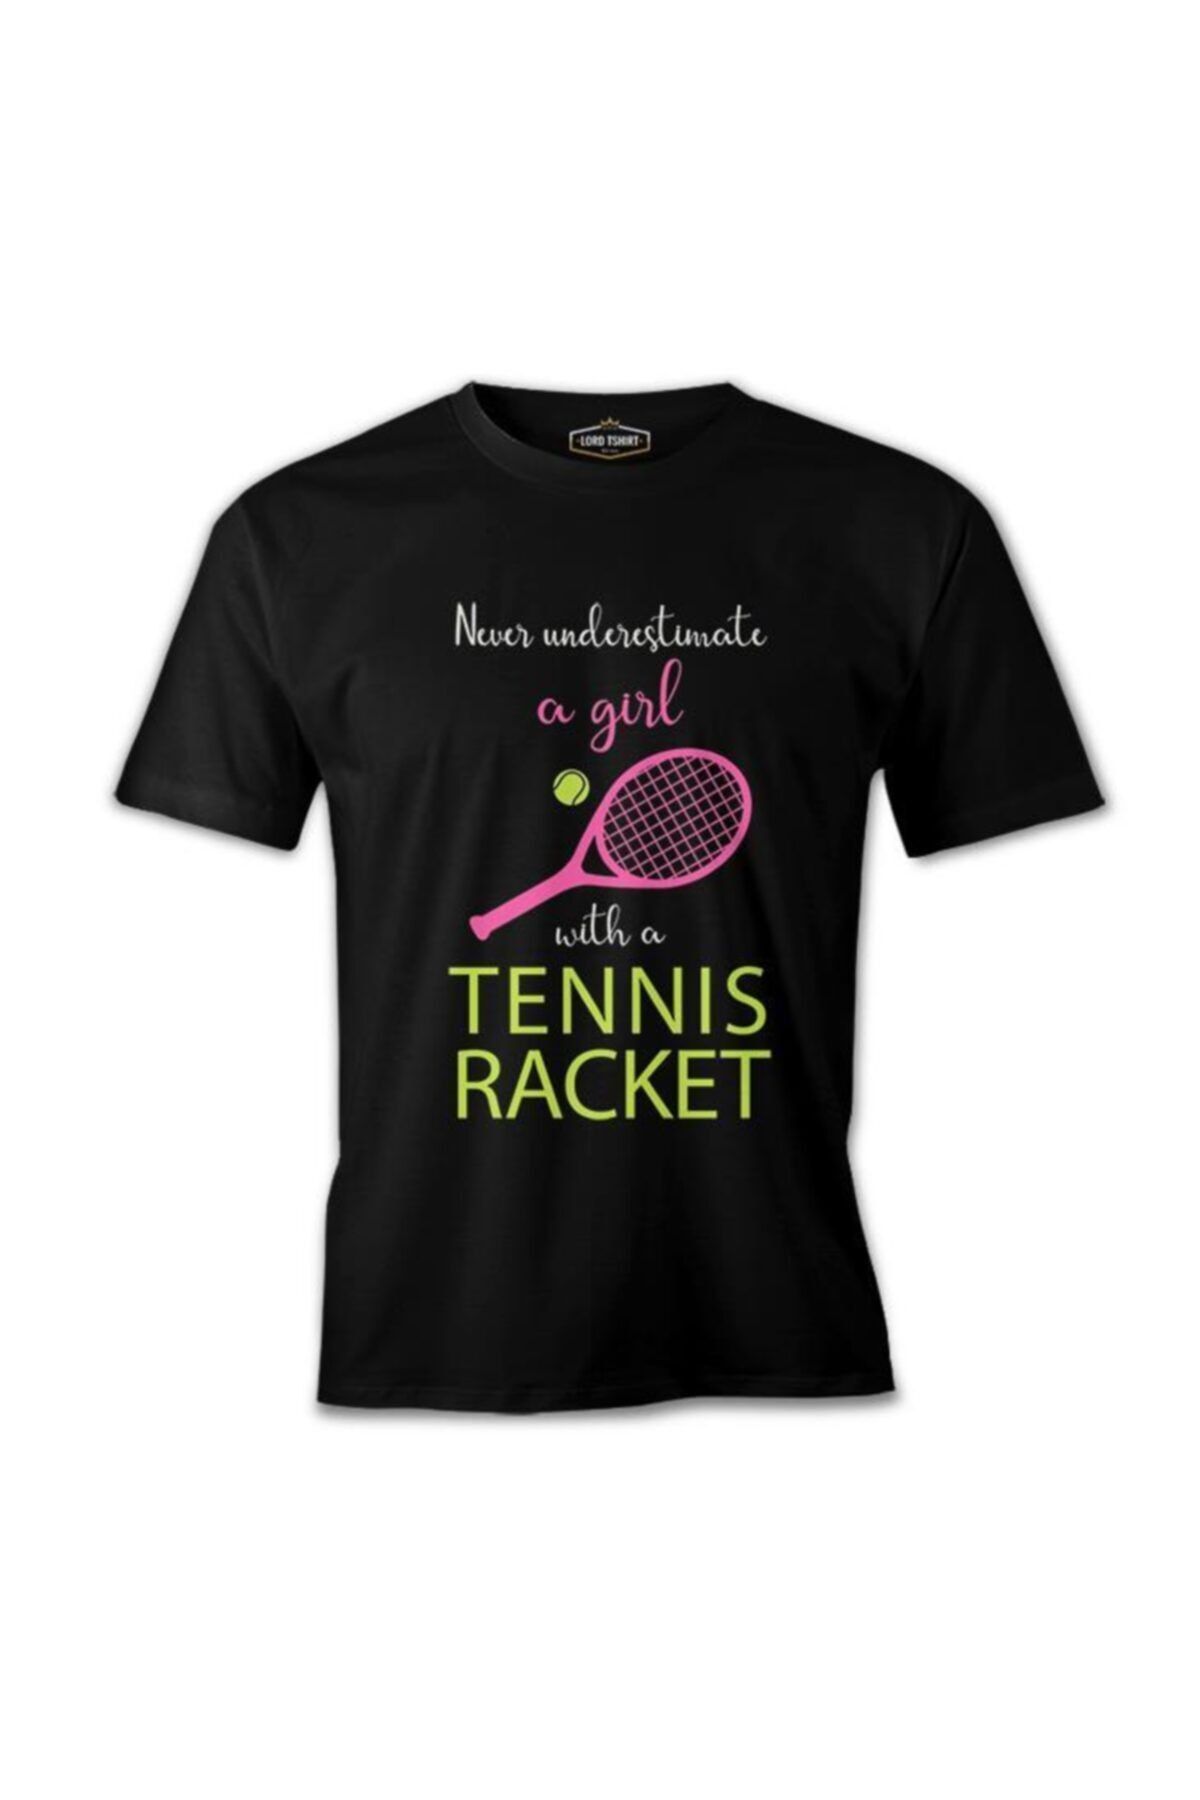 Lord T-Shirt Tenis - Kız Pembe Raket Siyah Erkek Tshirt